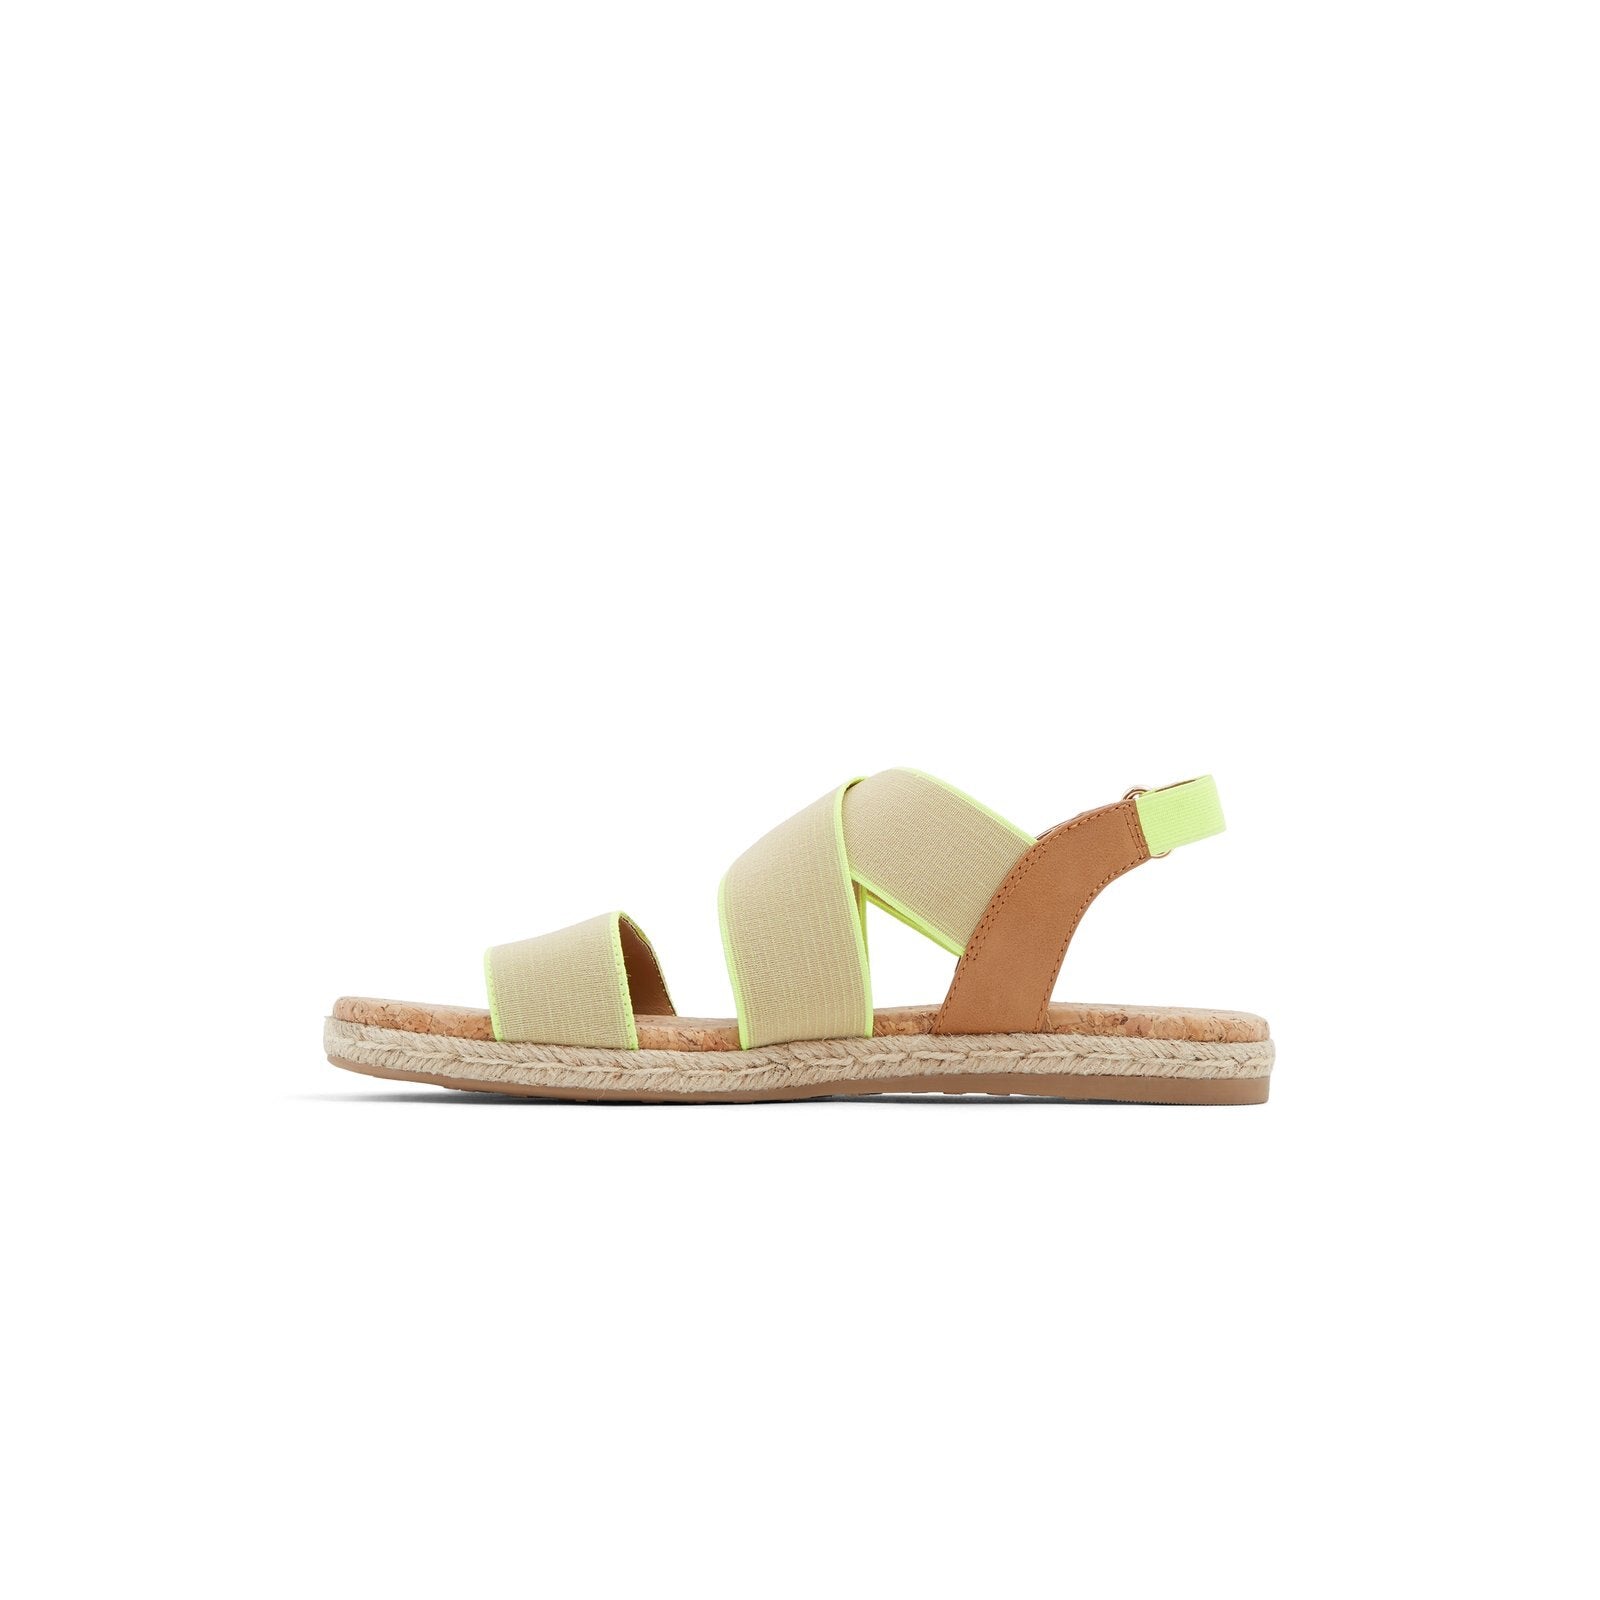 Mistii / Flat Sandals Women Shoes - BRIGHT YELLOW - CALL IT SPRING KSA